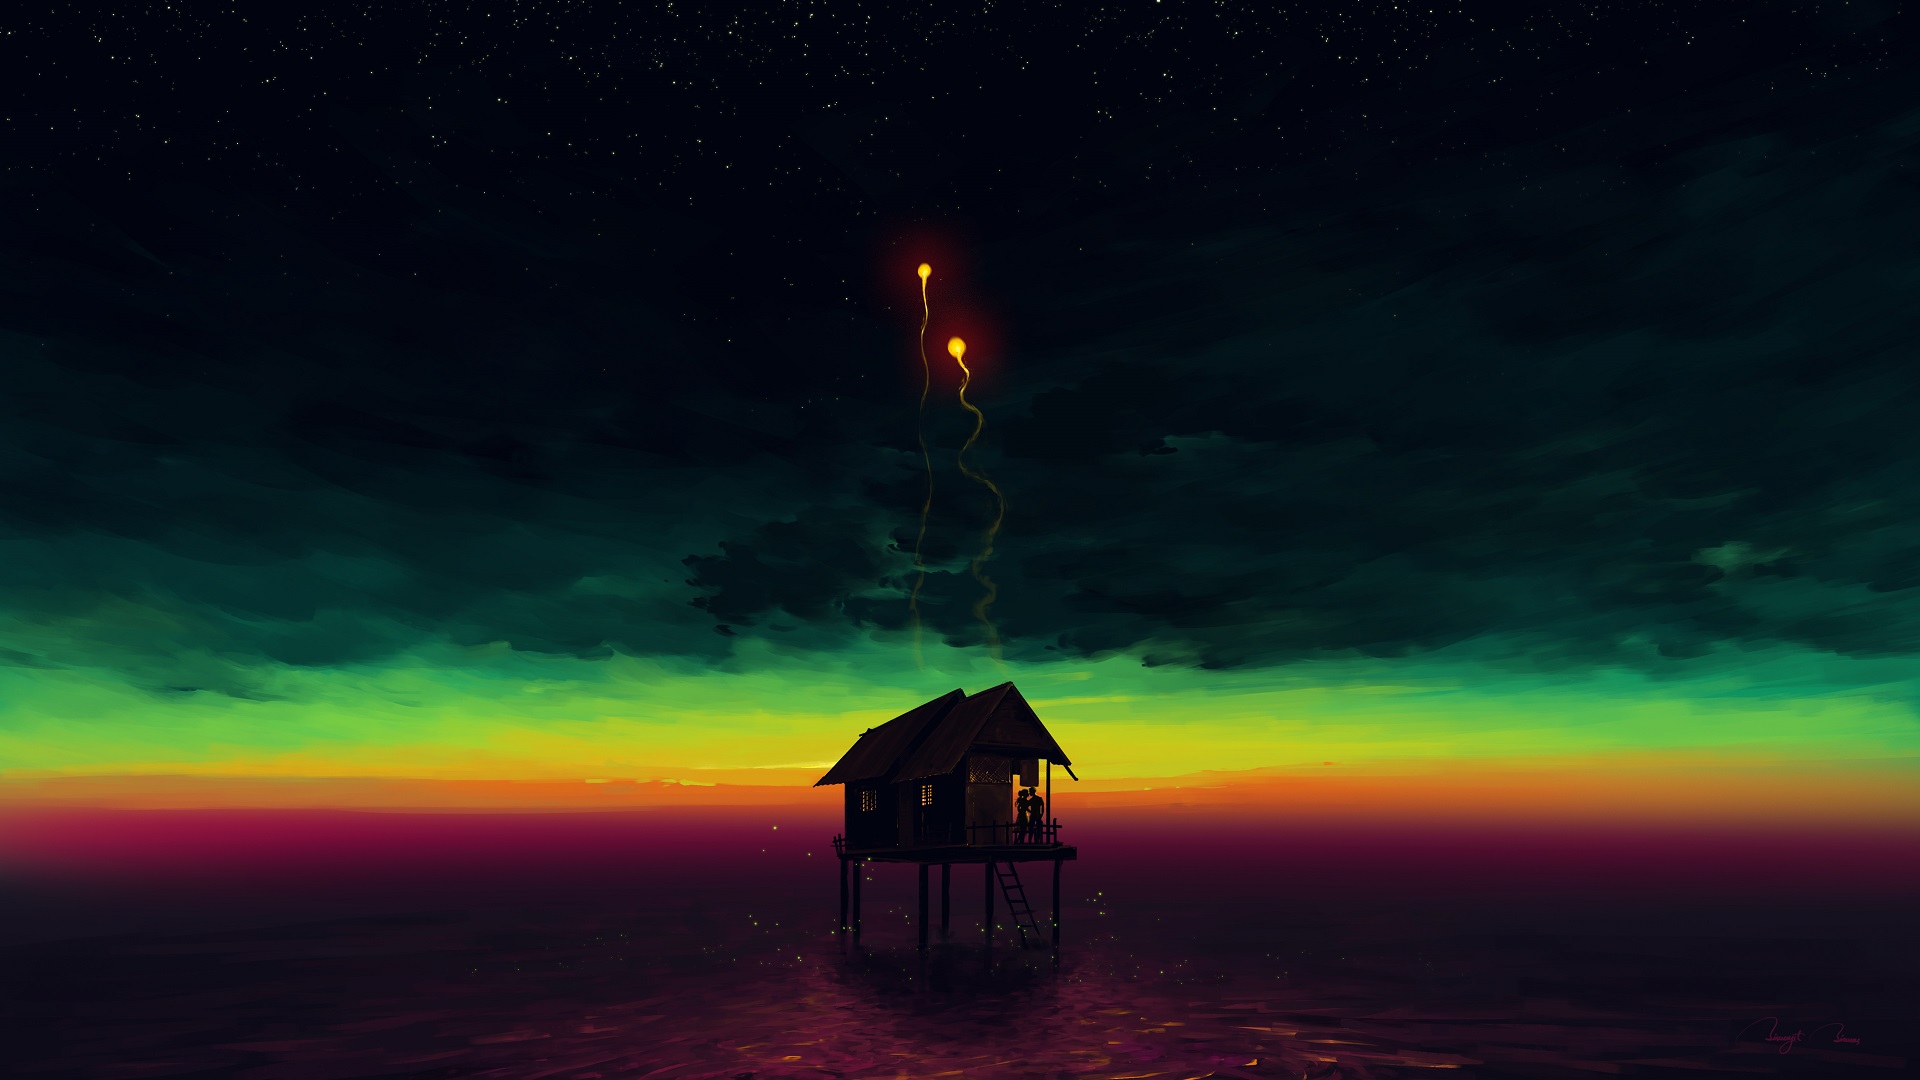 General 1920x1080 BisBiswas fantasy art digital art flares sea sunset ladder fireflies couple horizon stars